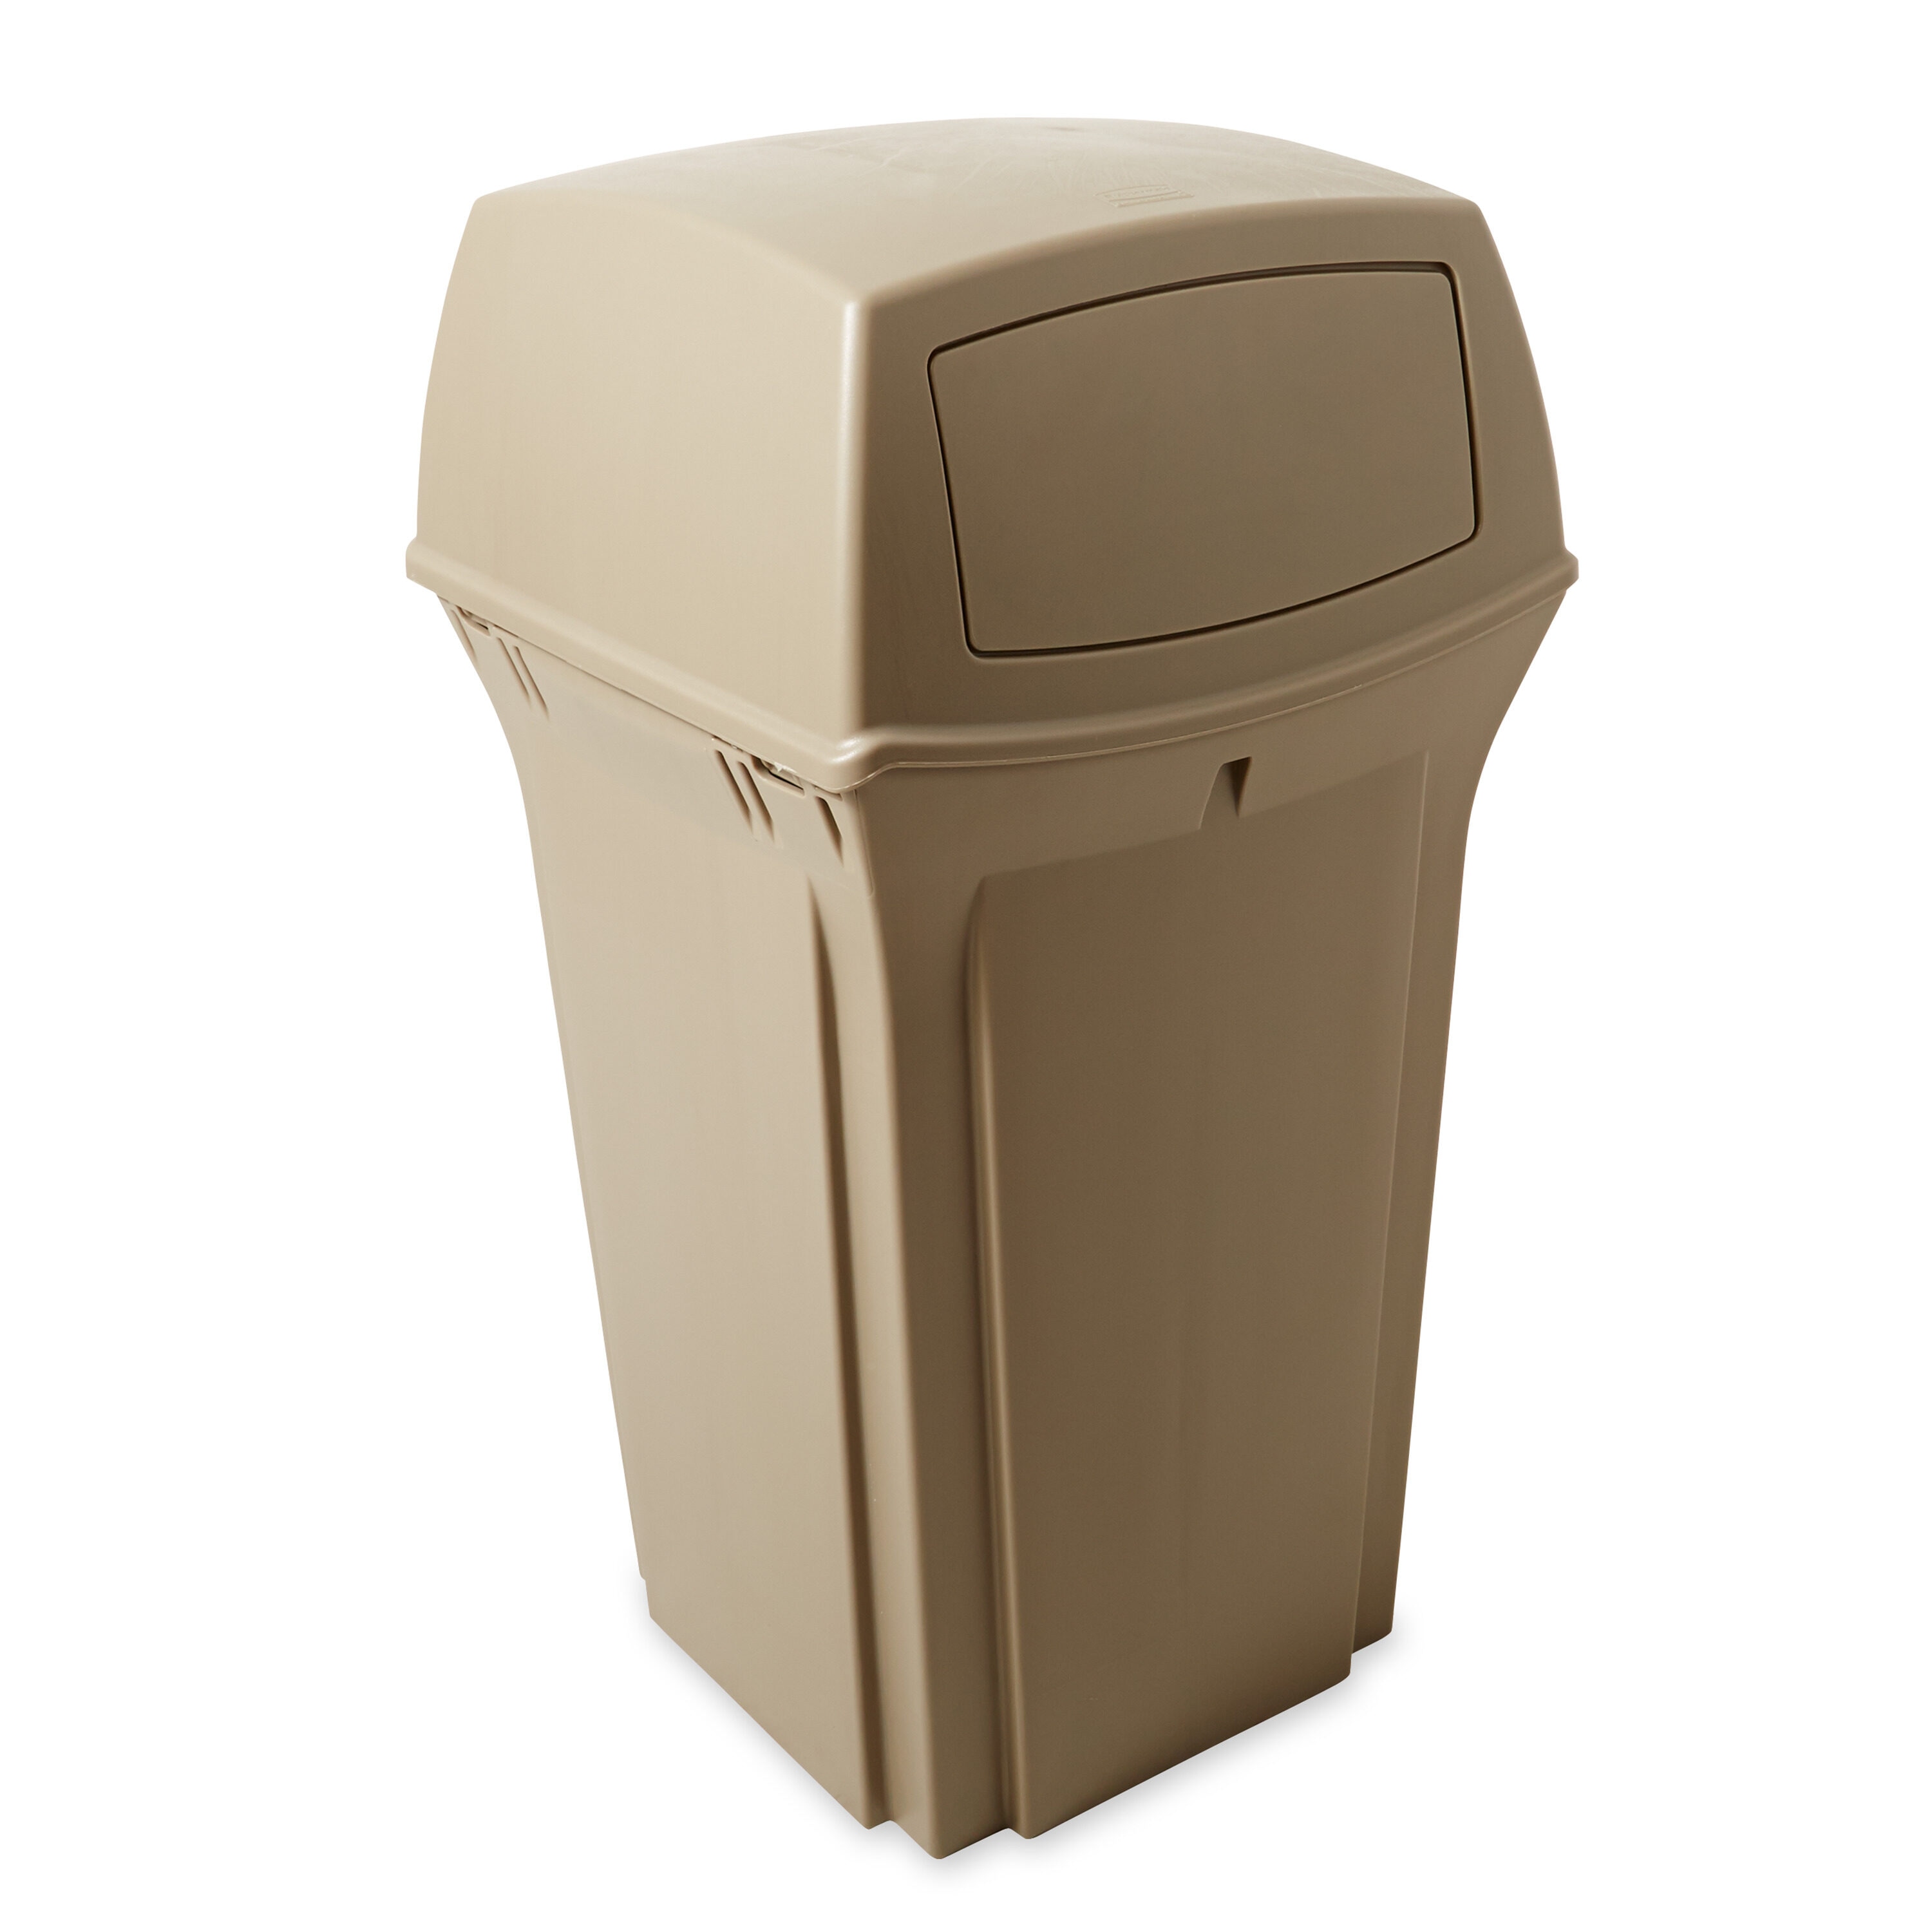 Commercial trash can Rubbermaid Ranger plastic, beige